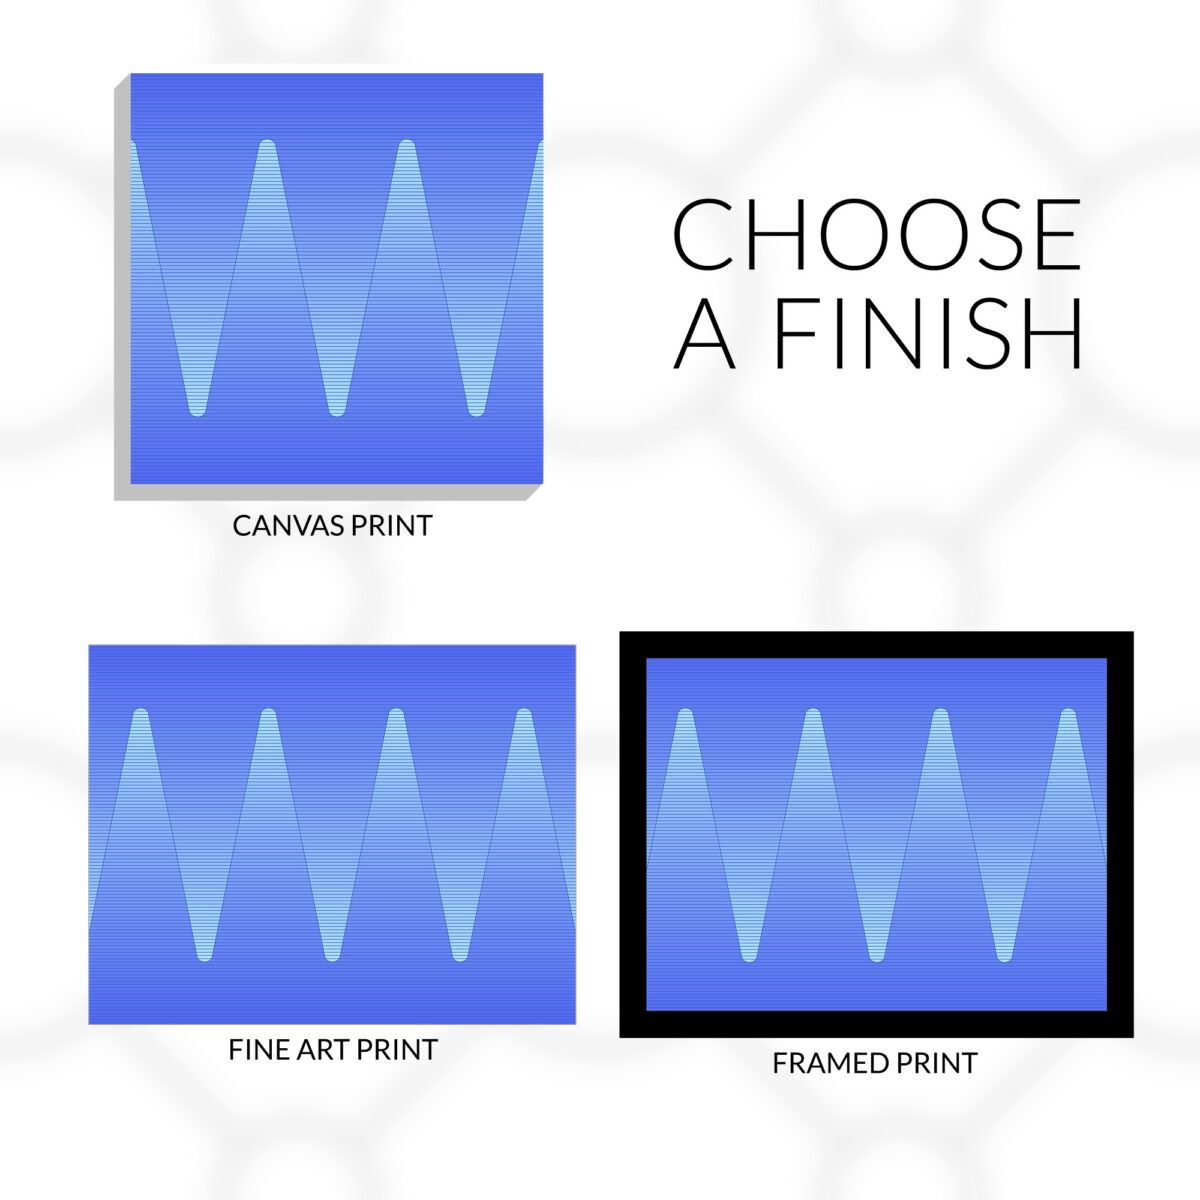 Polar Points design choose a finish. Canvas print, fine art print, or framed fine art print.